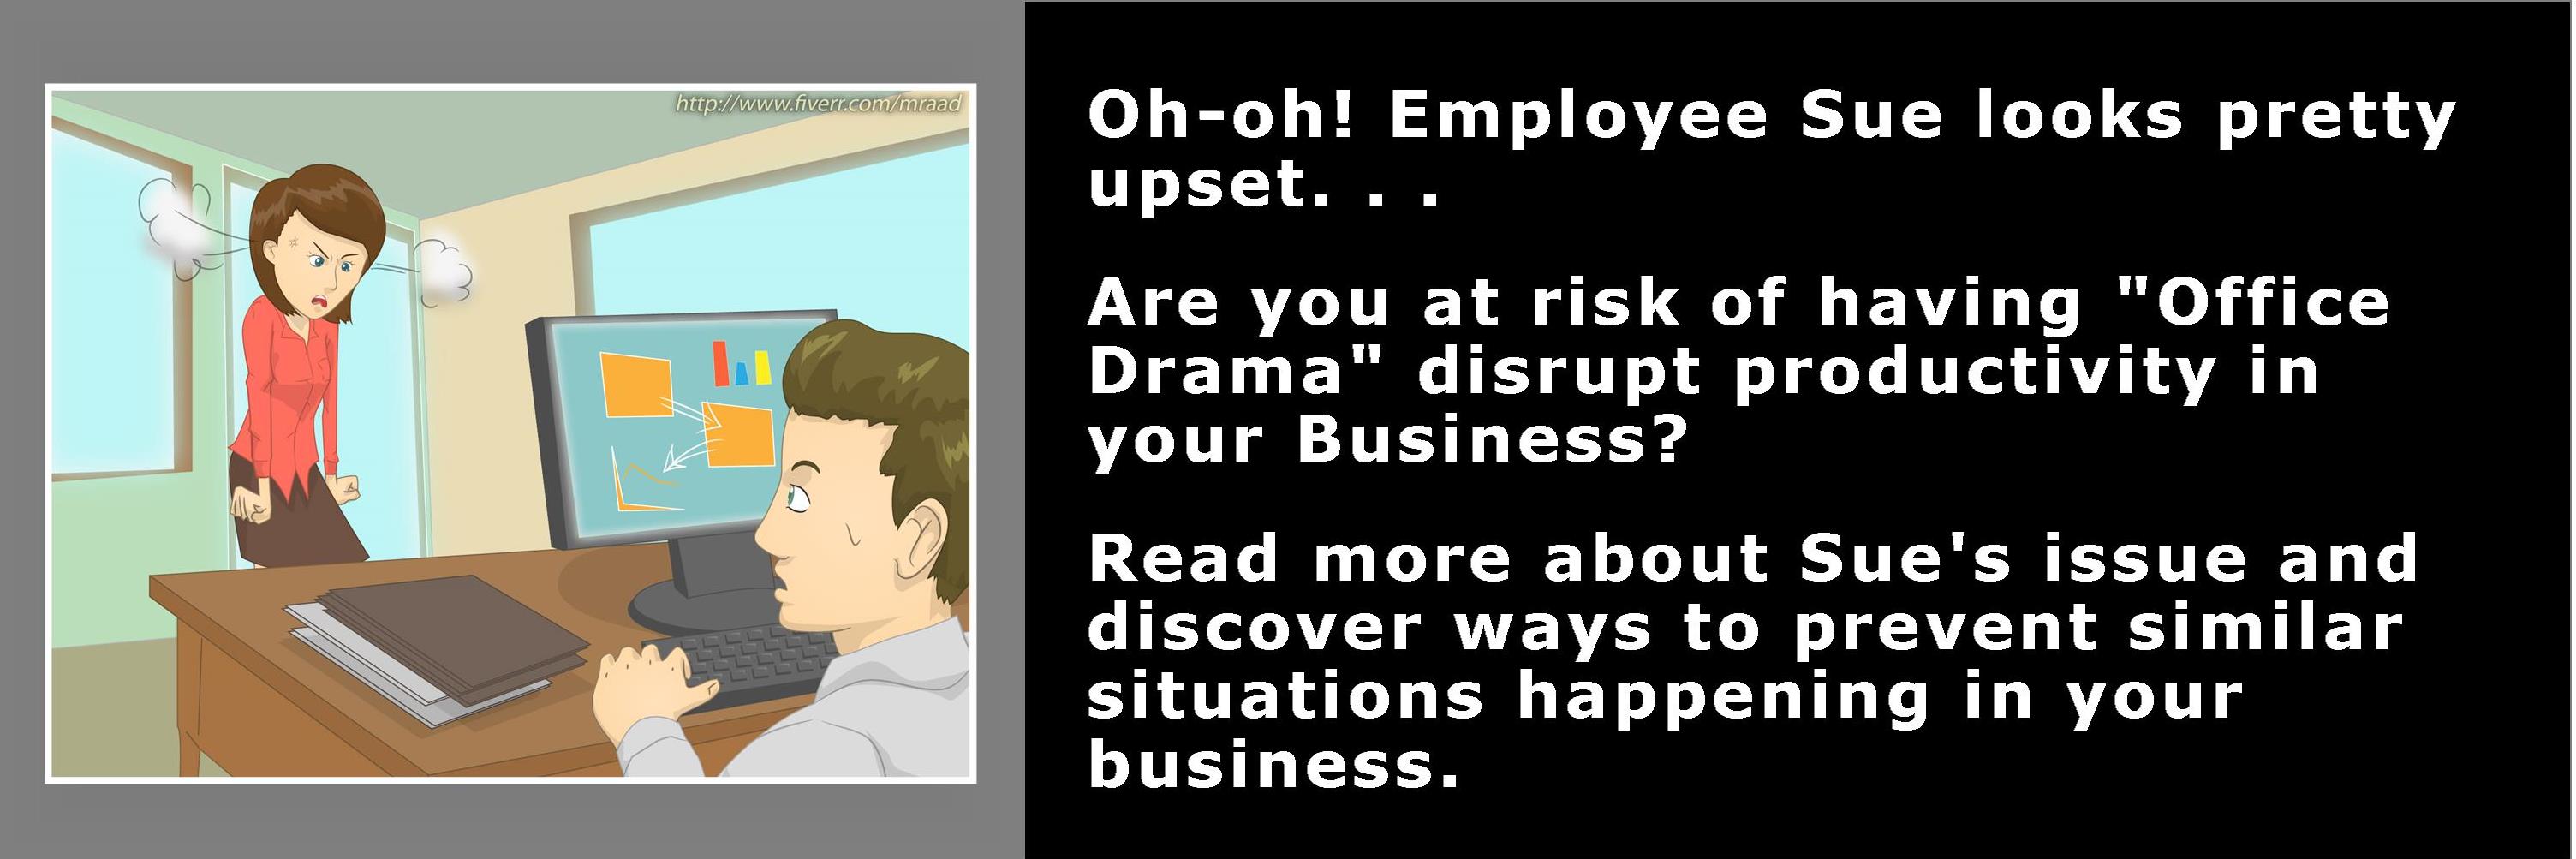 Employee Dispute